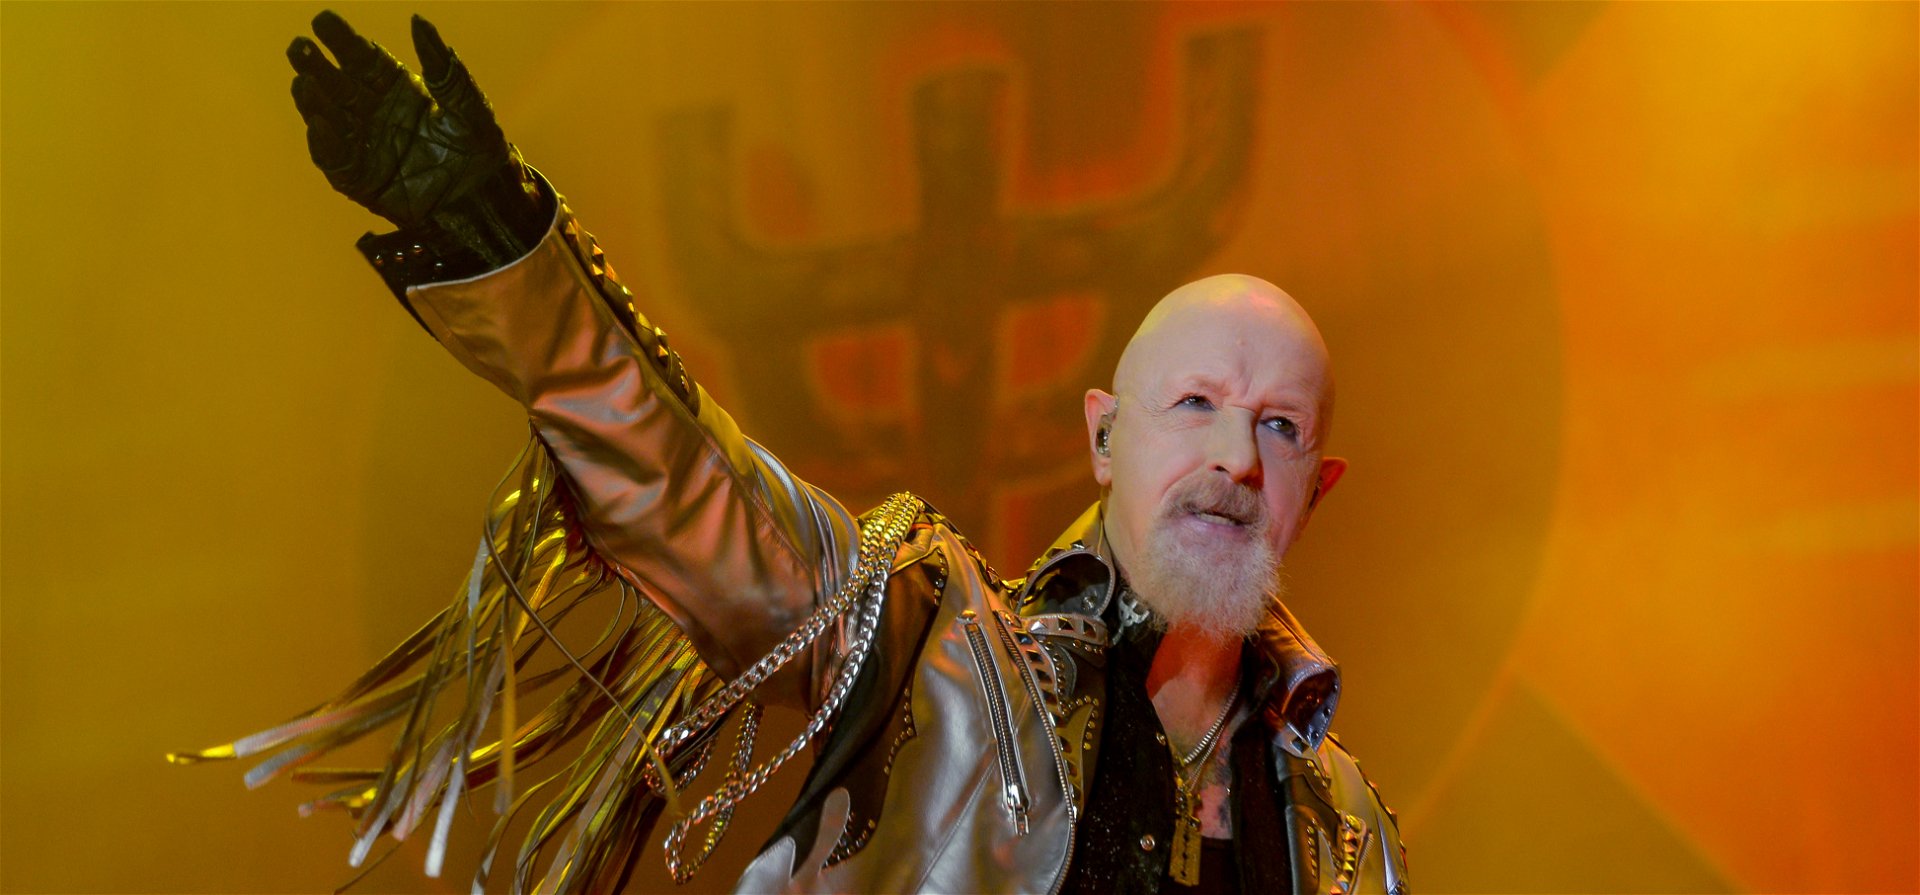 Jubileumi koncertet ad Budapesten a népszerű Judas Priest zenekar